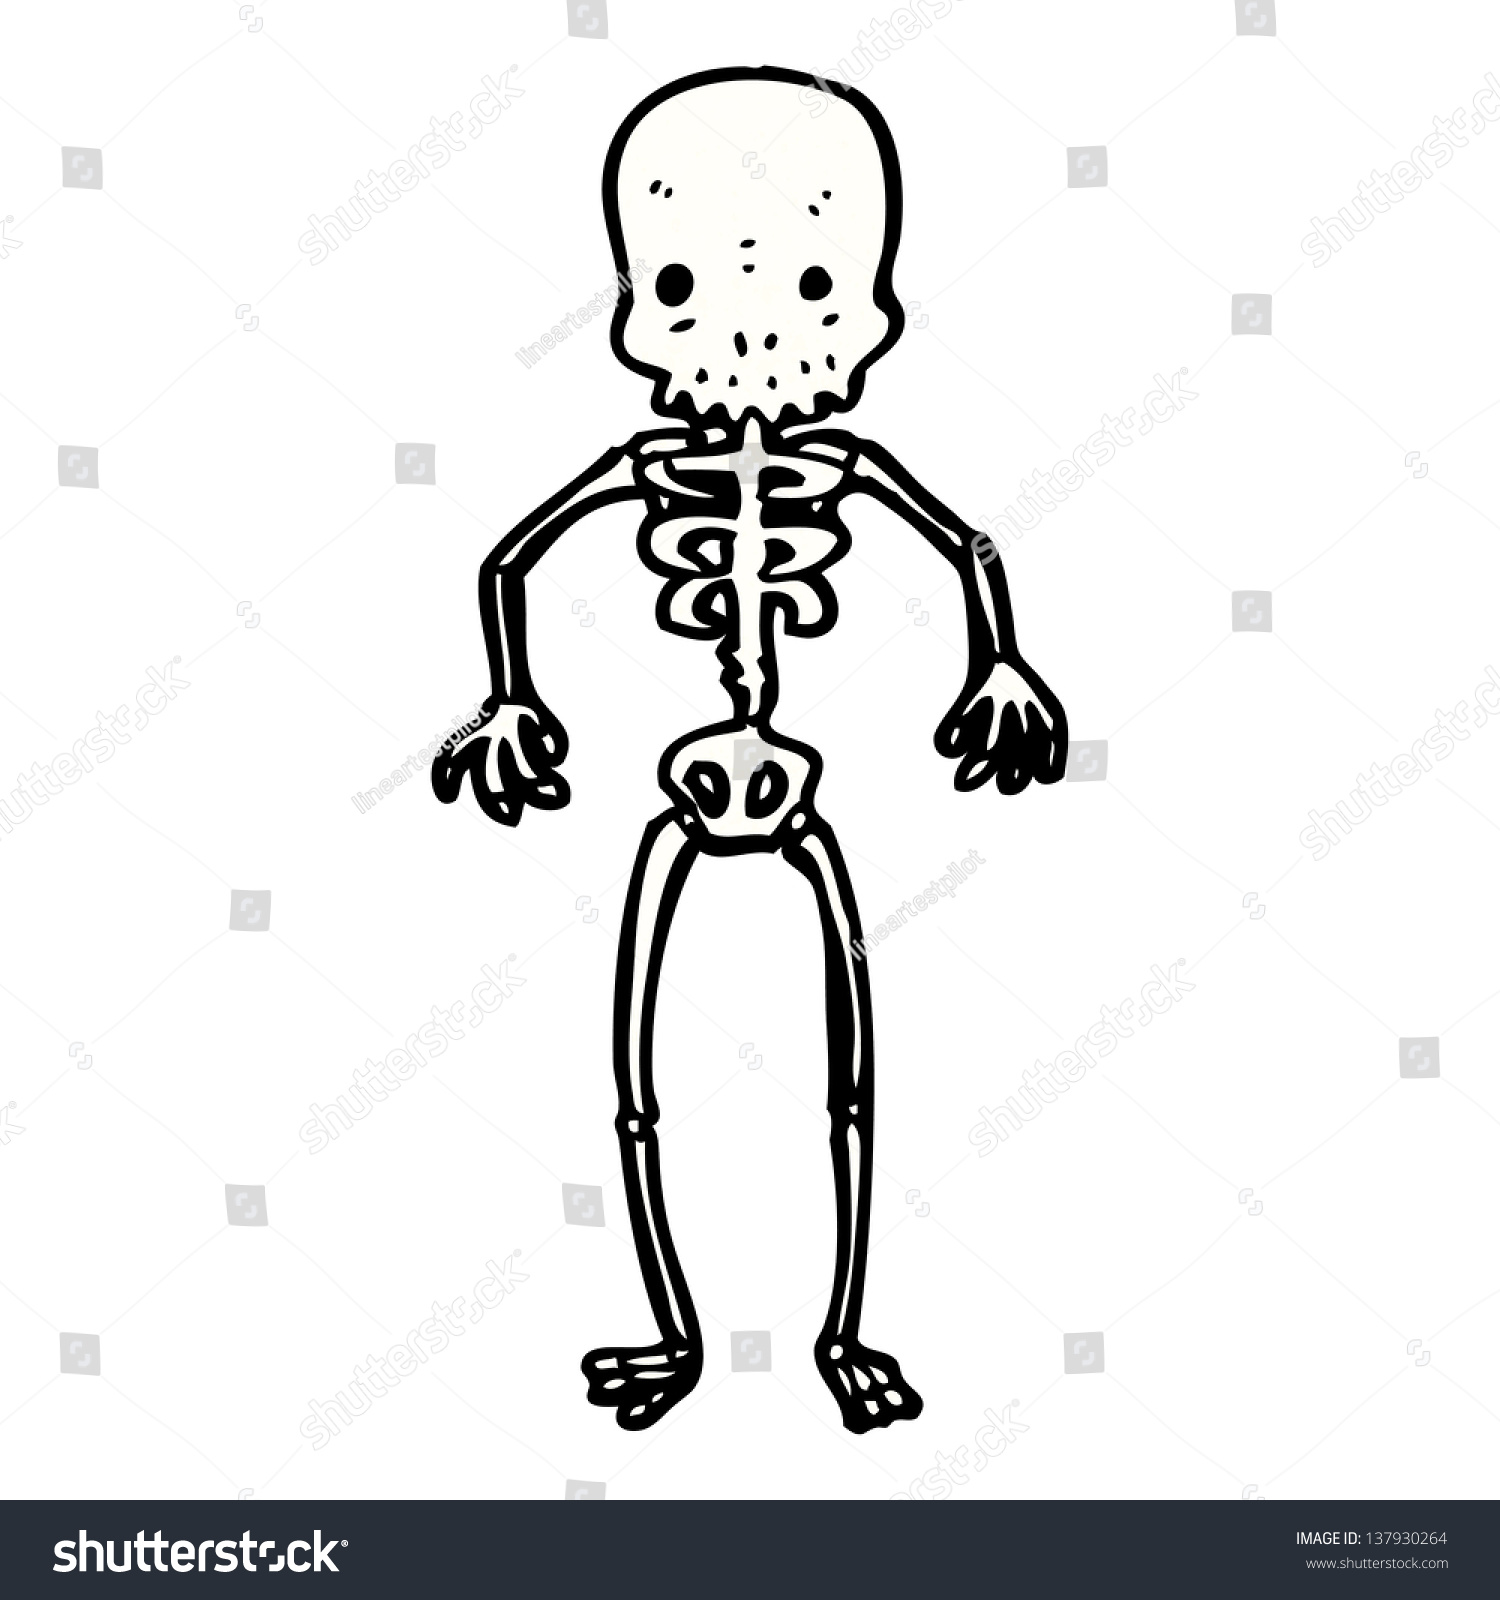 Edit Vectors Free Online - cartoon skeleton | Shutterstock Editor